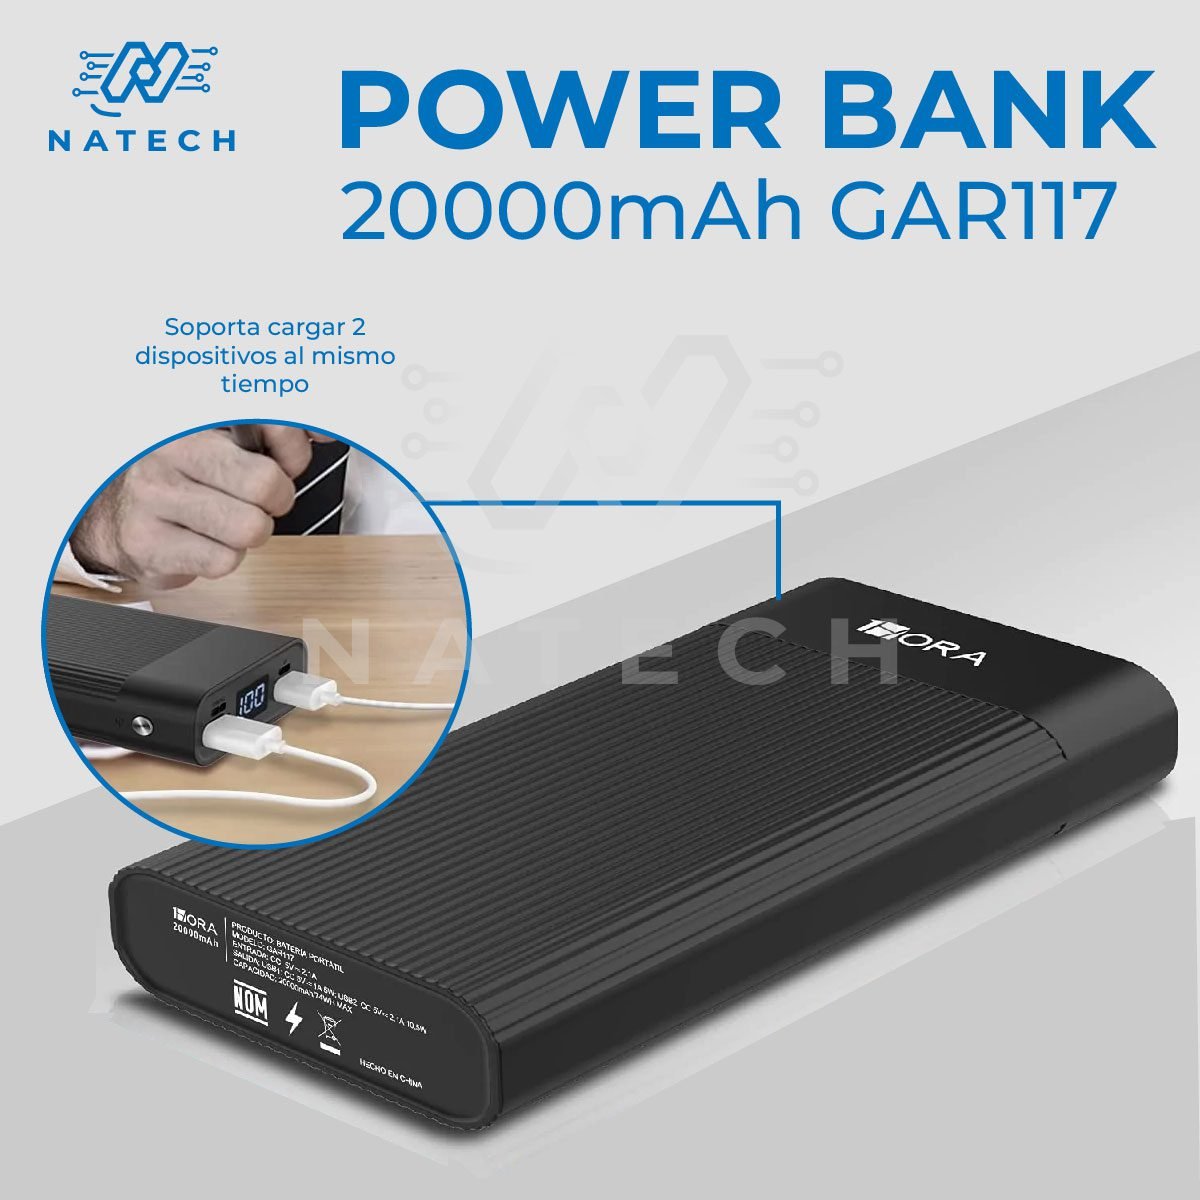 Power Bank Batería Portátil 20000mAh GAR117